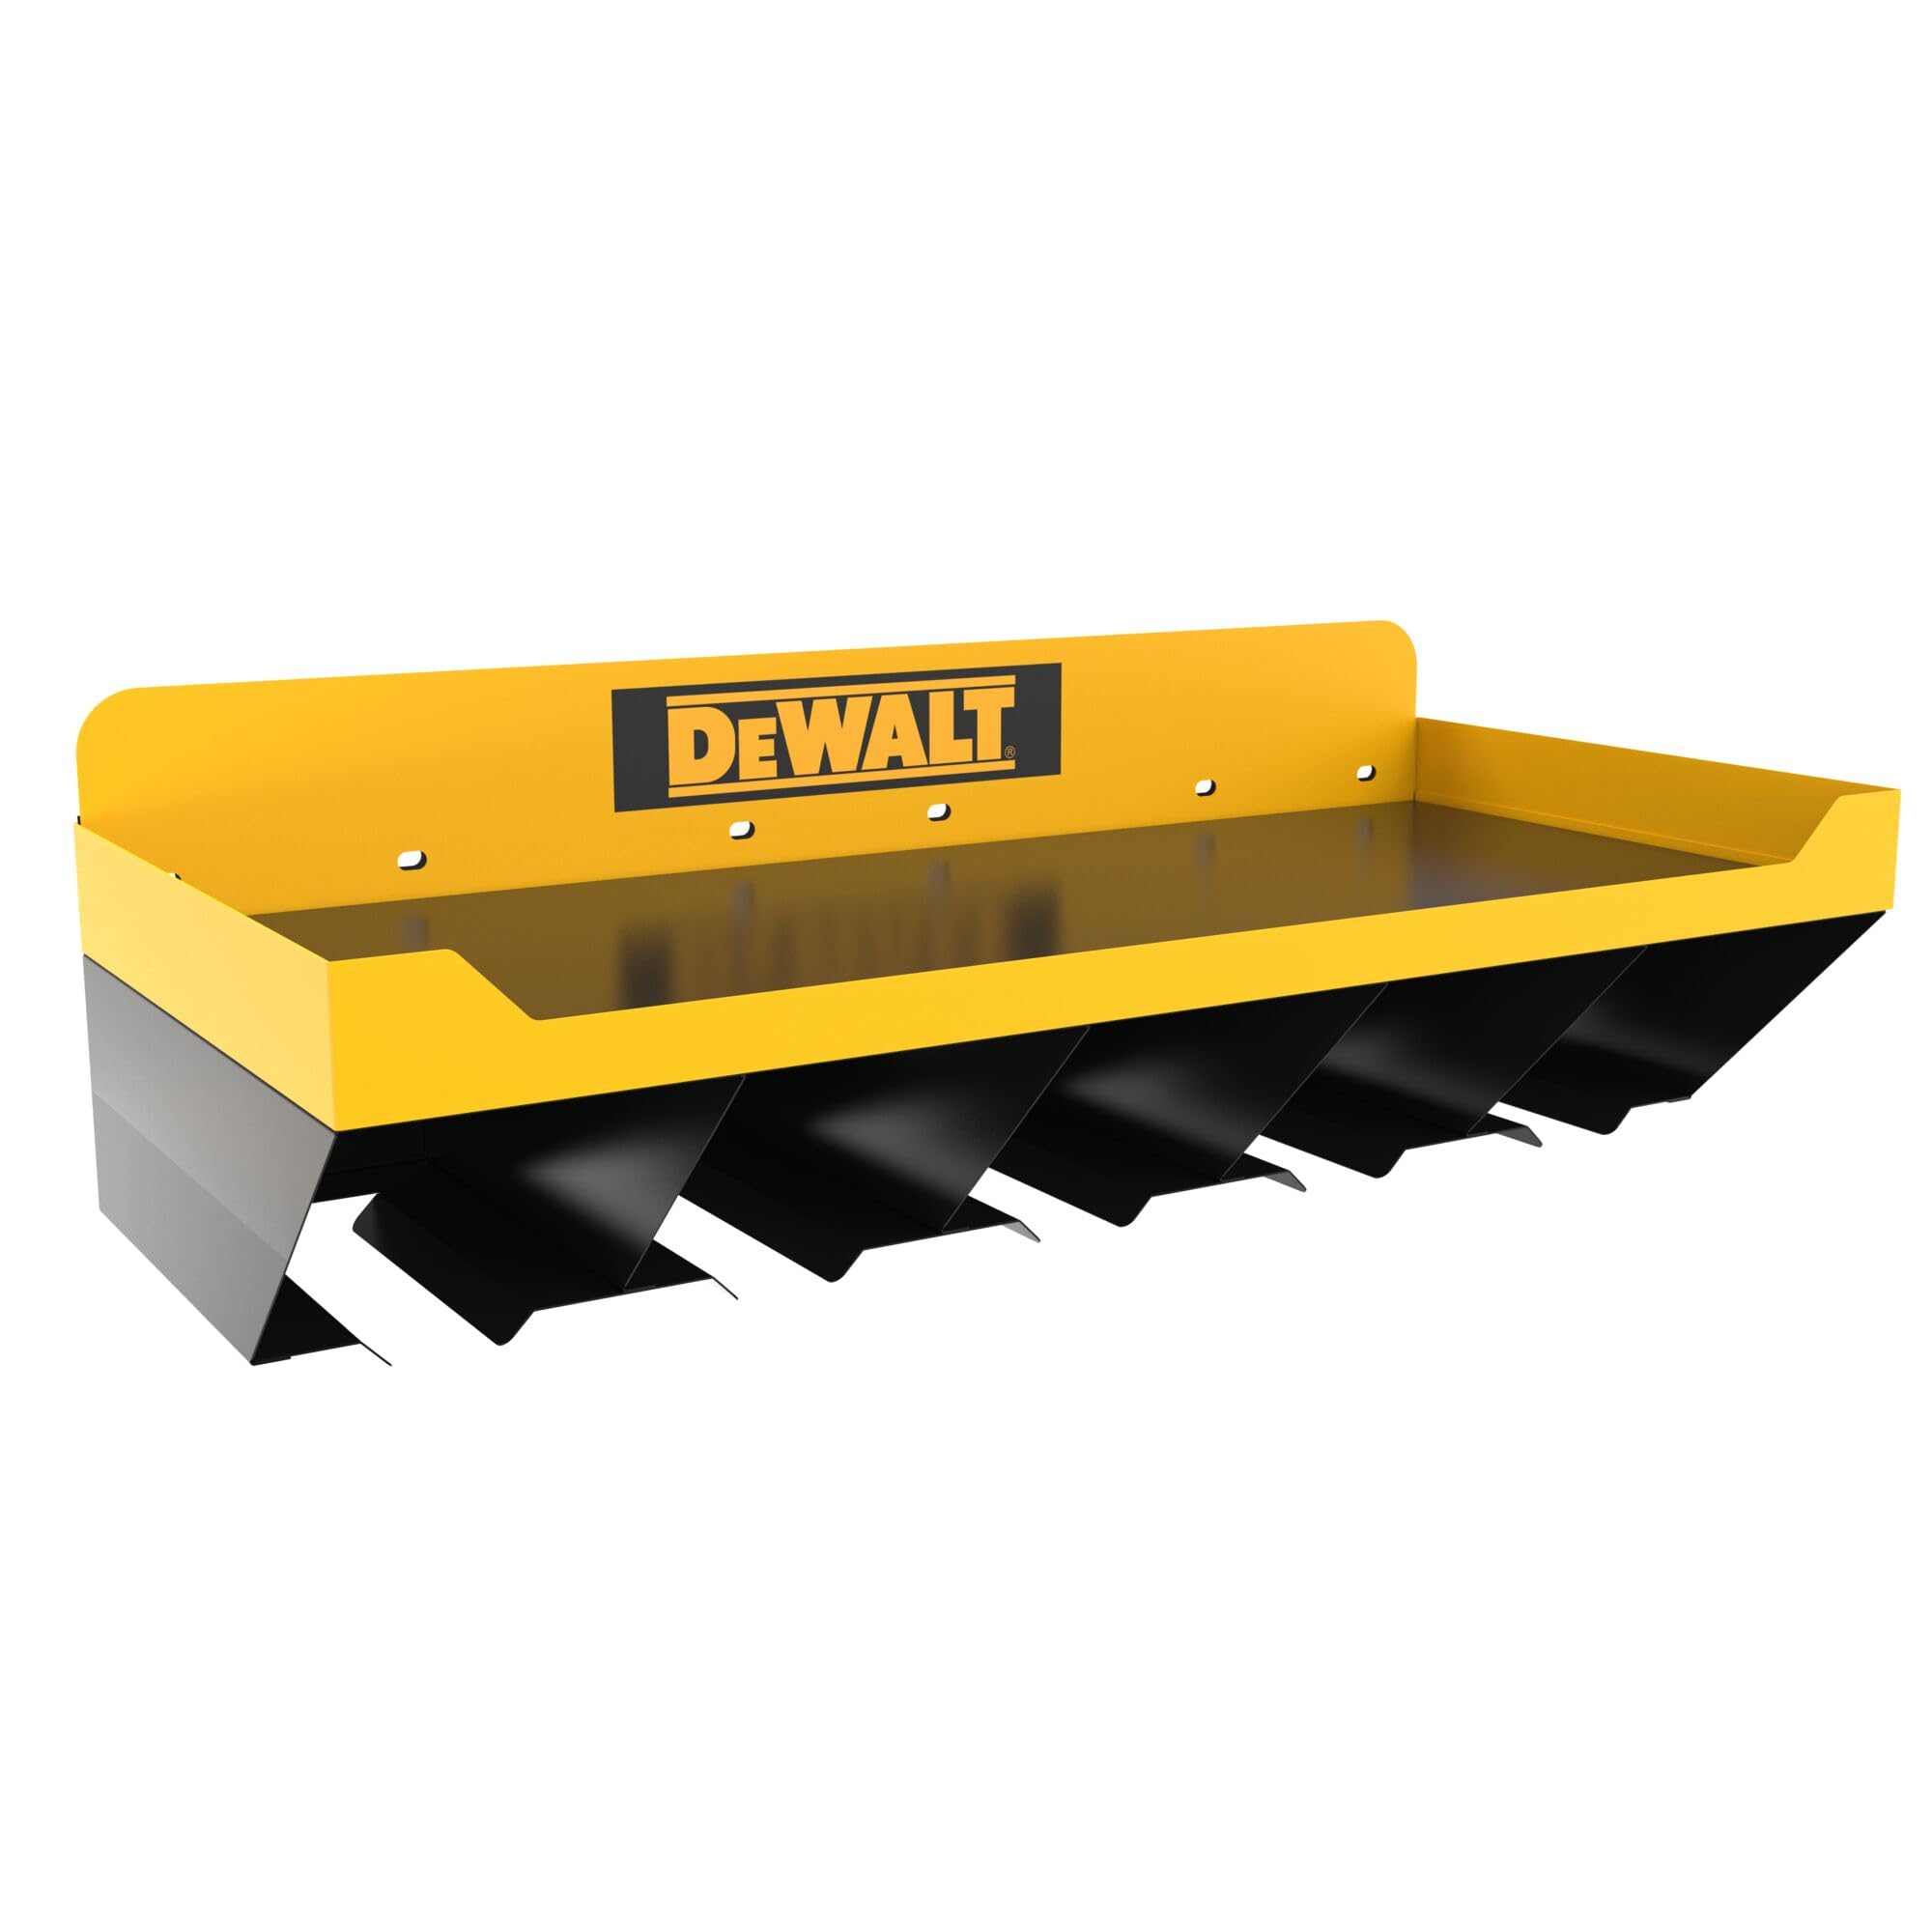 DEWALT Tool Organizer, Power Tool Storage Shelf, Hold up to 5 Tools, 100lb Capacity, DEWALT Workshop Storage System Compatible (DWST82822)